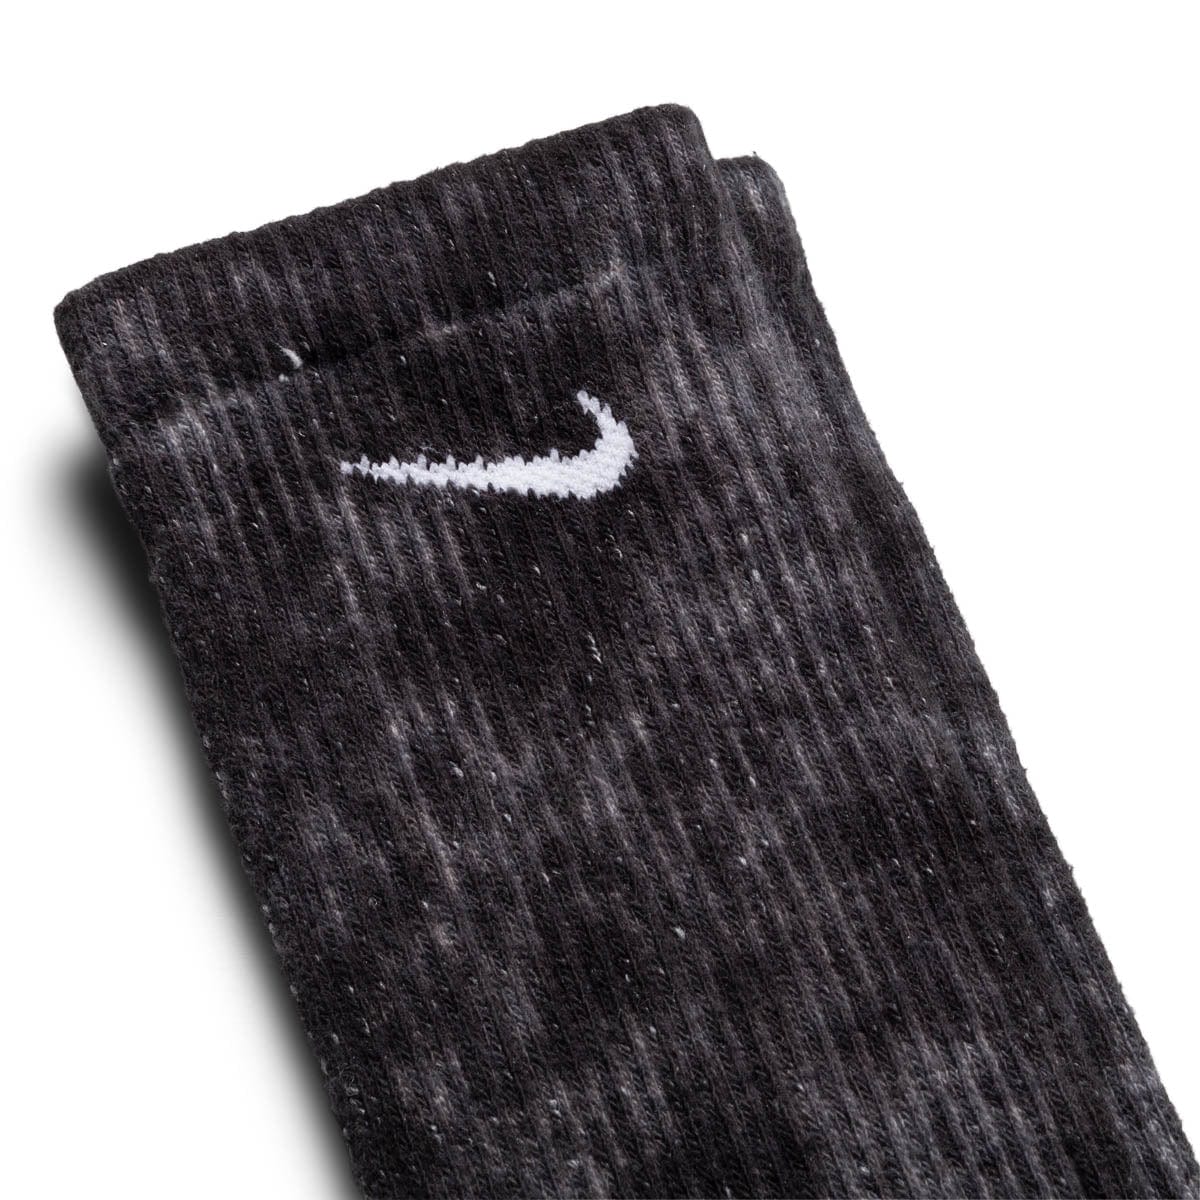 Nike Socks EVERYDAY PLUS CUSH CREW SOCKS